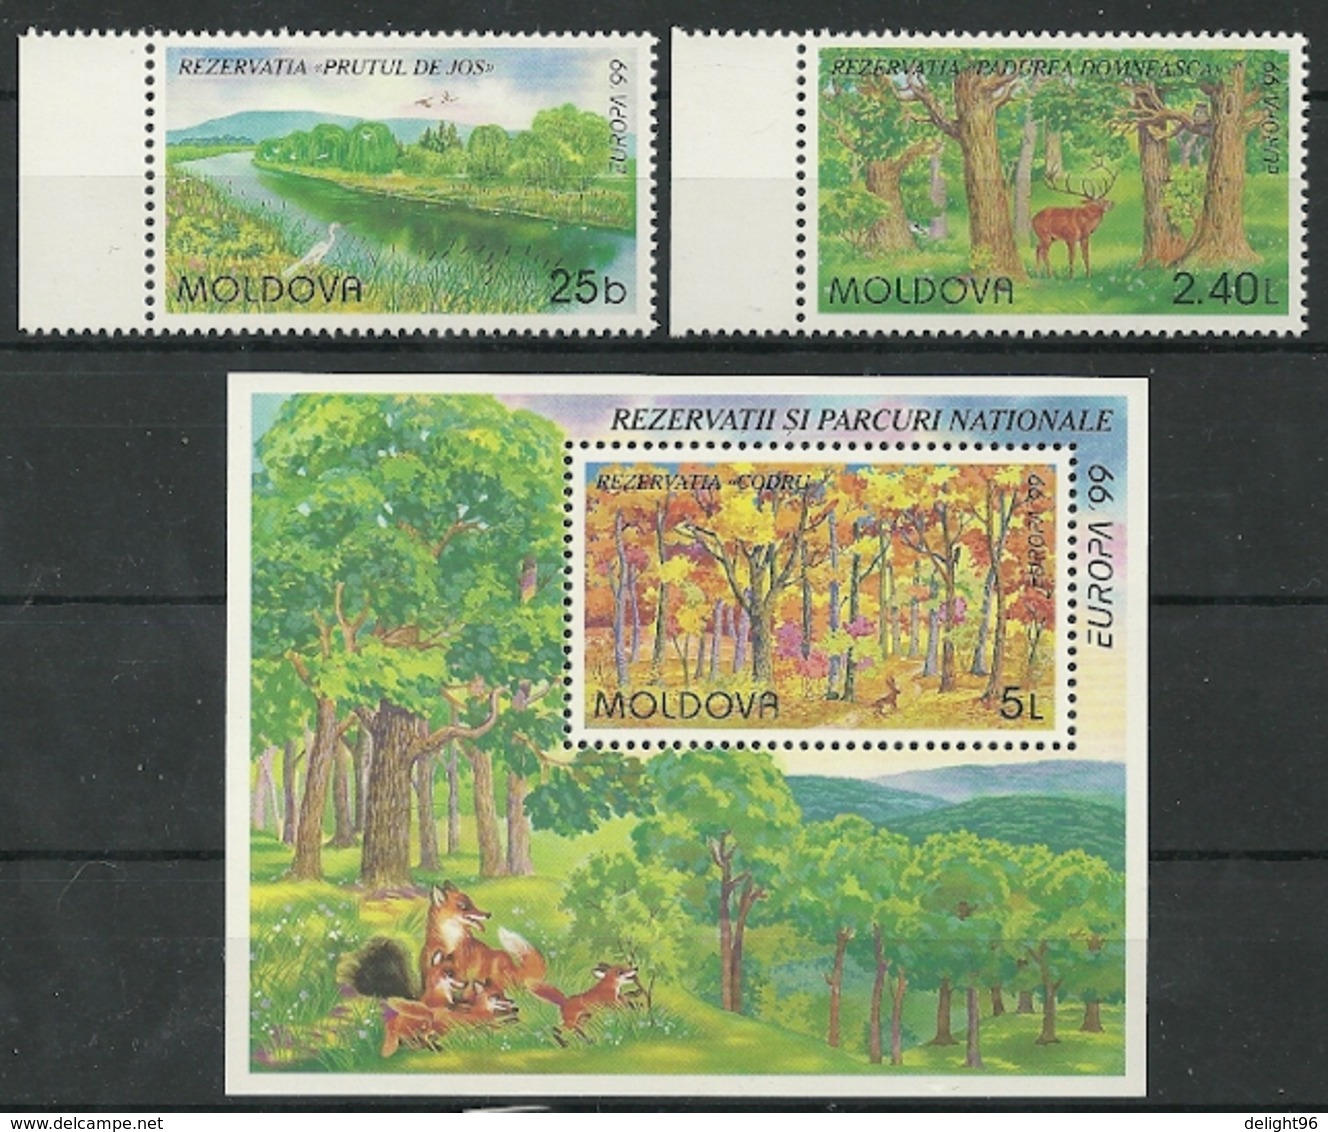 1999 Moldova Europa: National Parks And Nature Reserves Set And Souvenir Sheet (** / MNH / UMM) - 1999